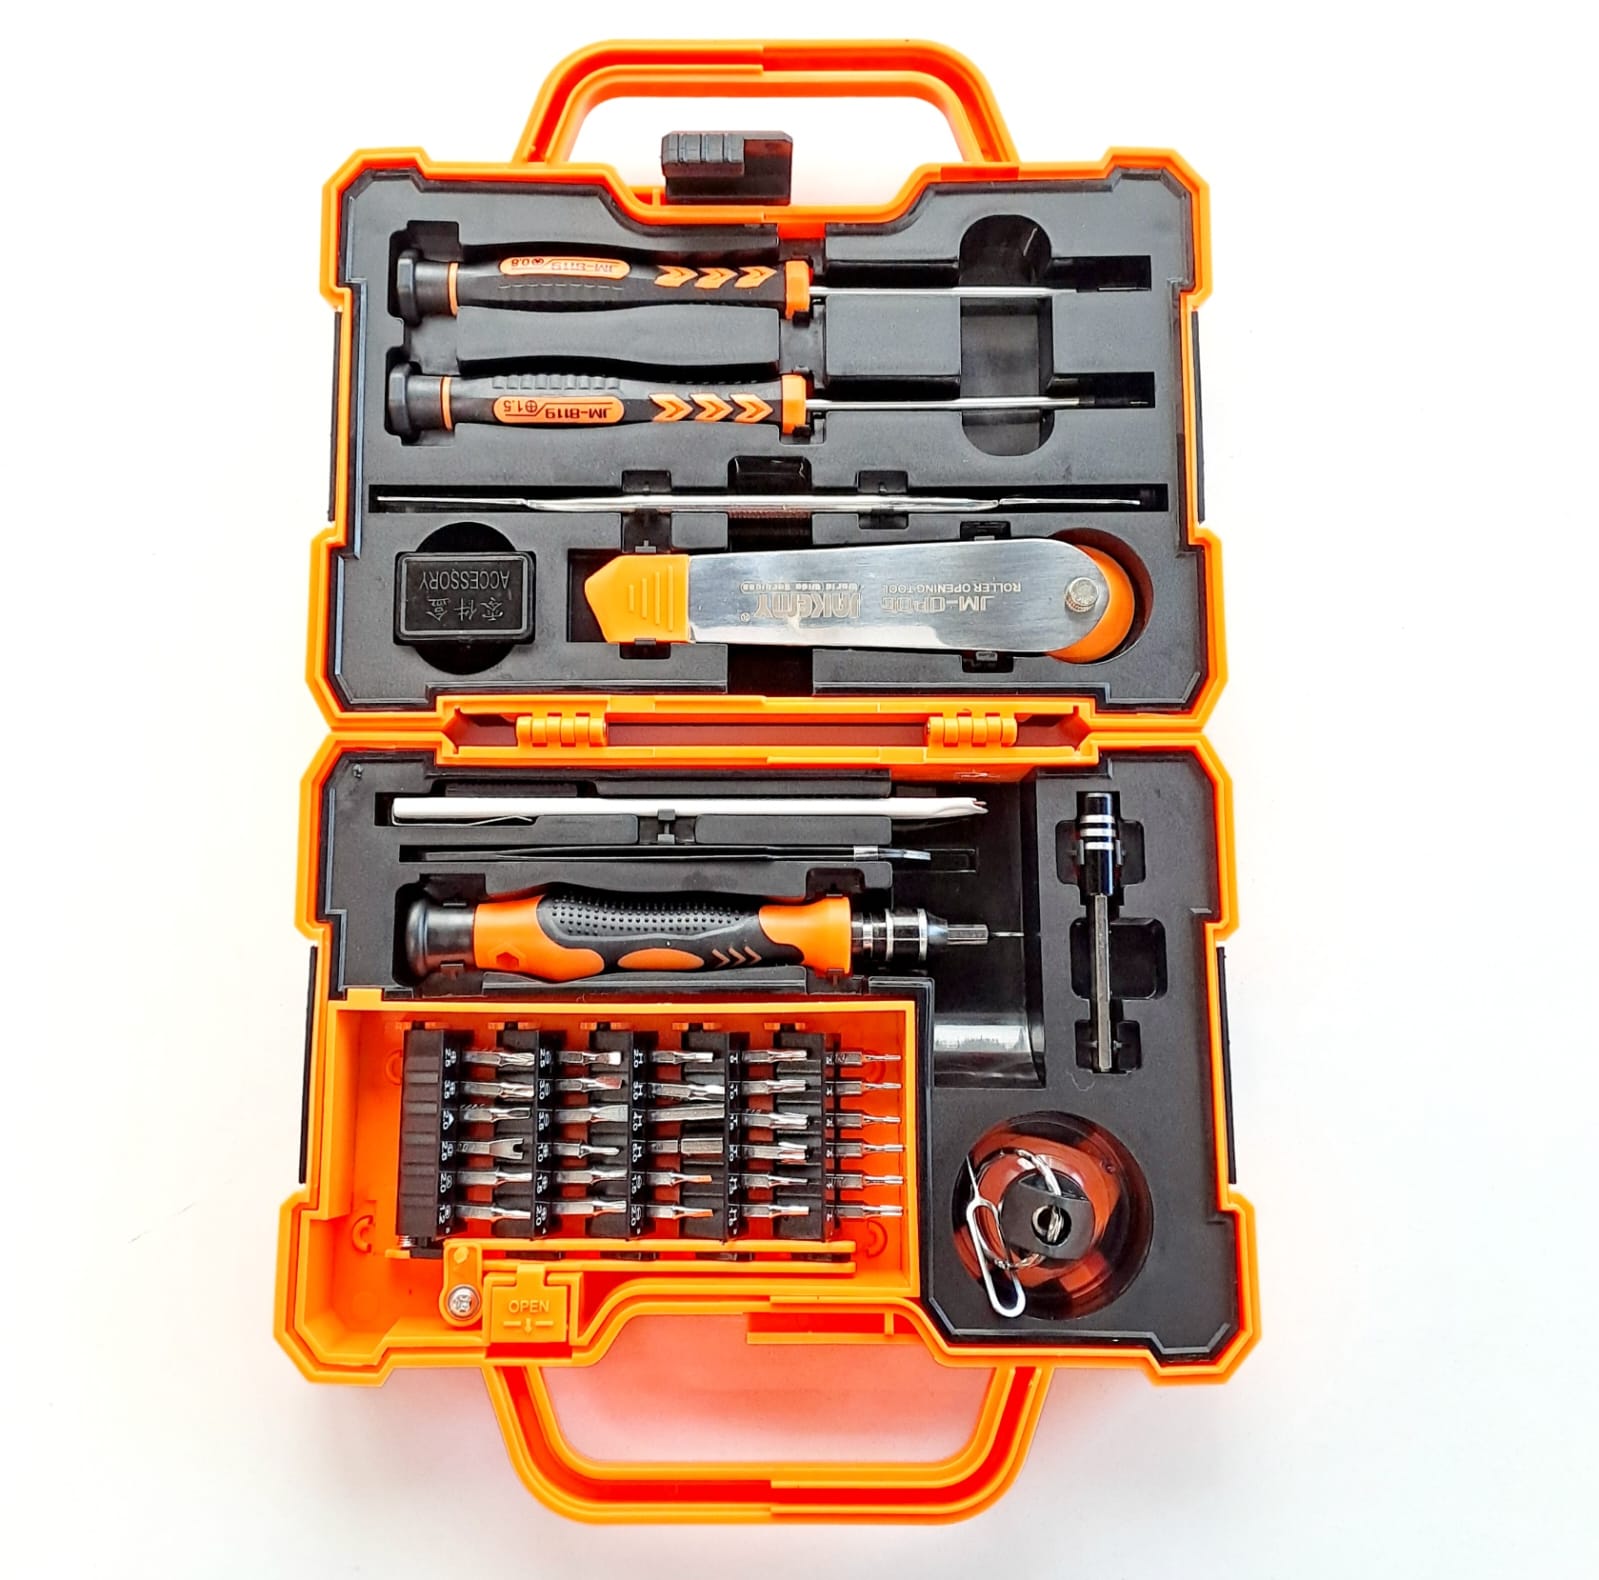 47-in-1 Precision Screwdriver Tool Kit